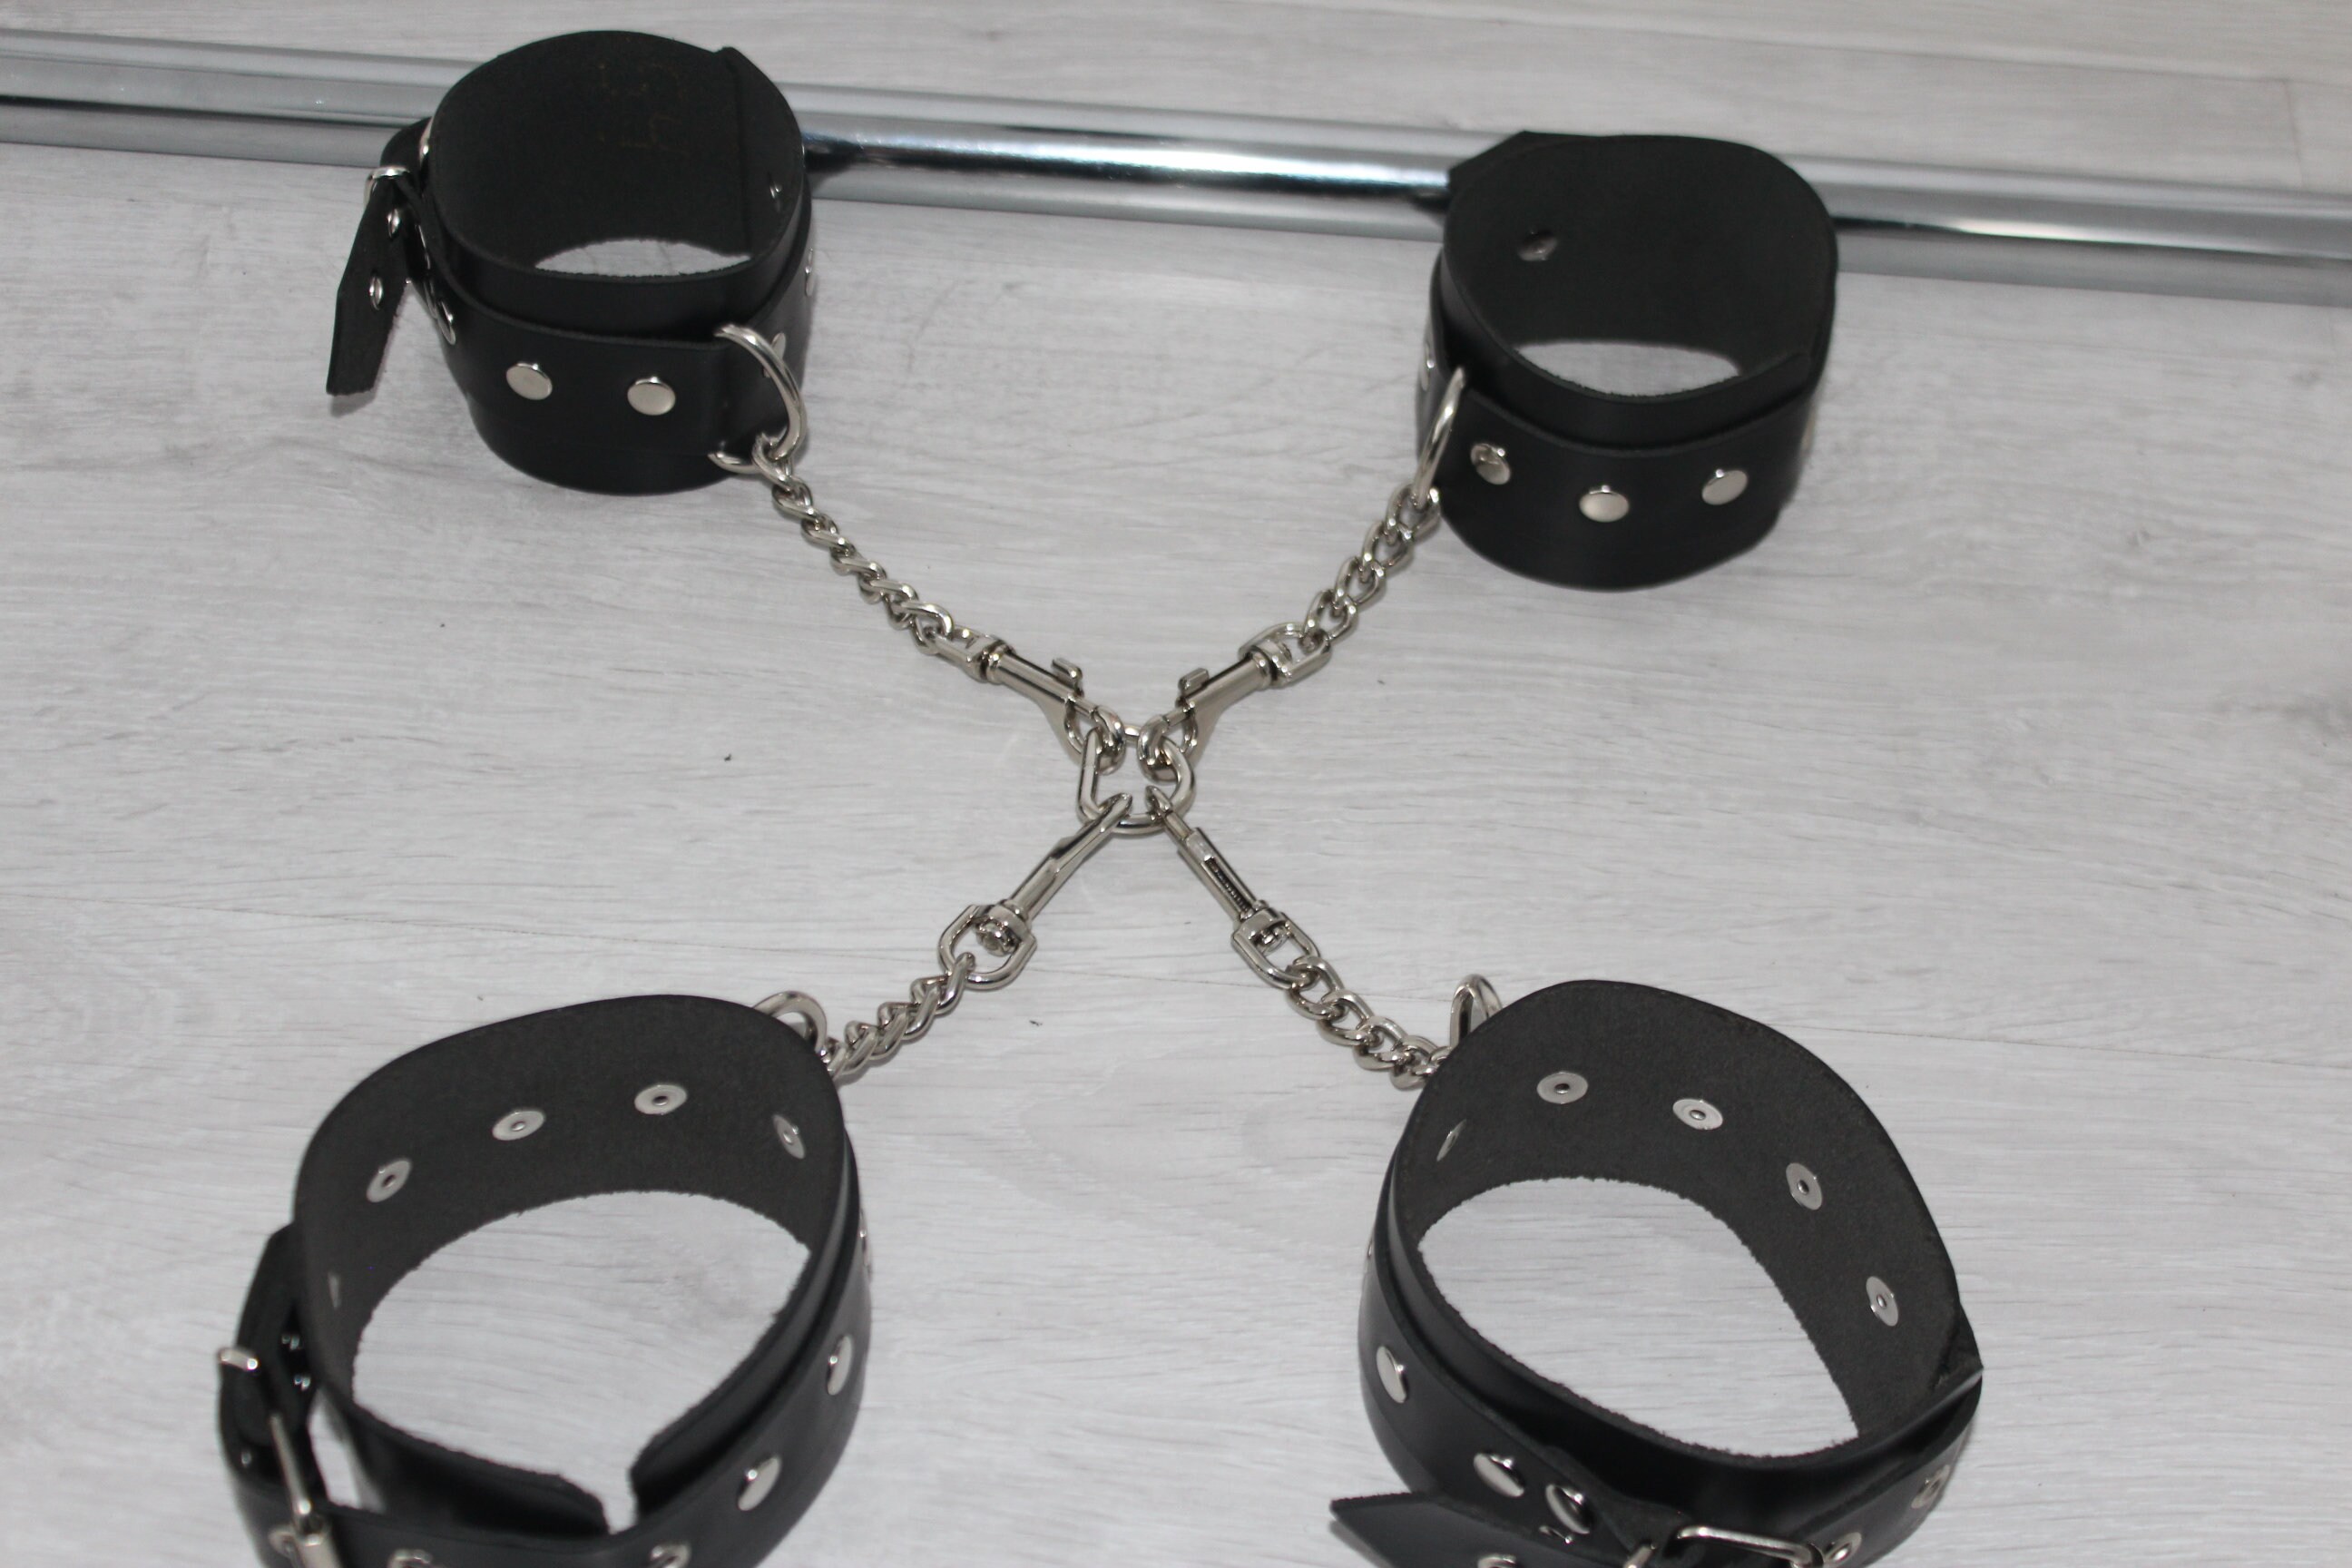 bondage BDSM cross BDSM pillory whip stocks enslavement leather handcuffs